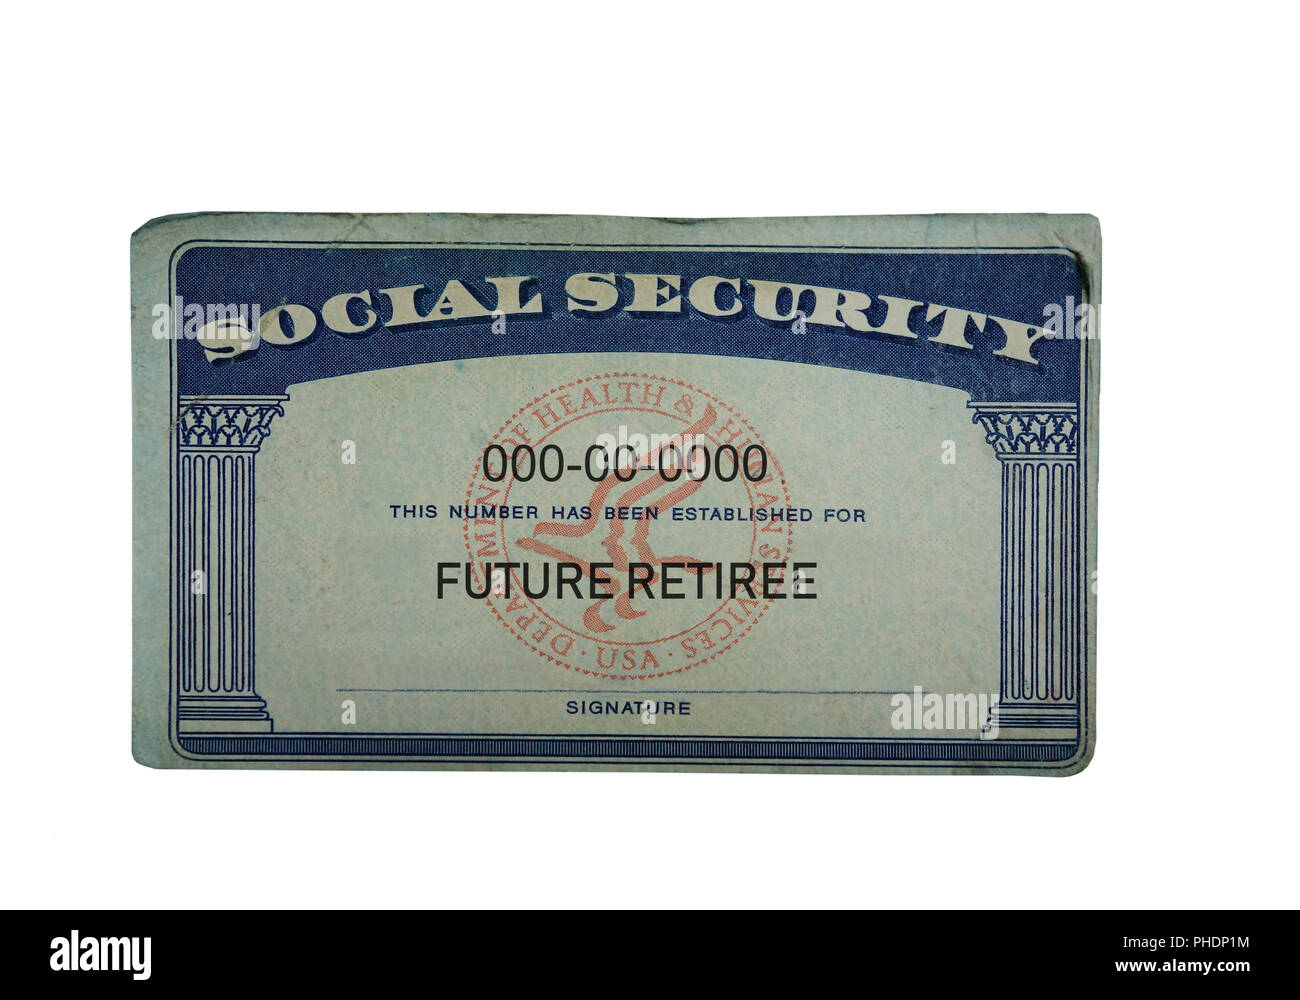 Future Retiree social security card Stock Photo